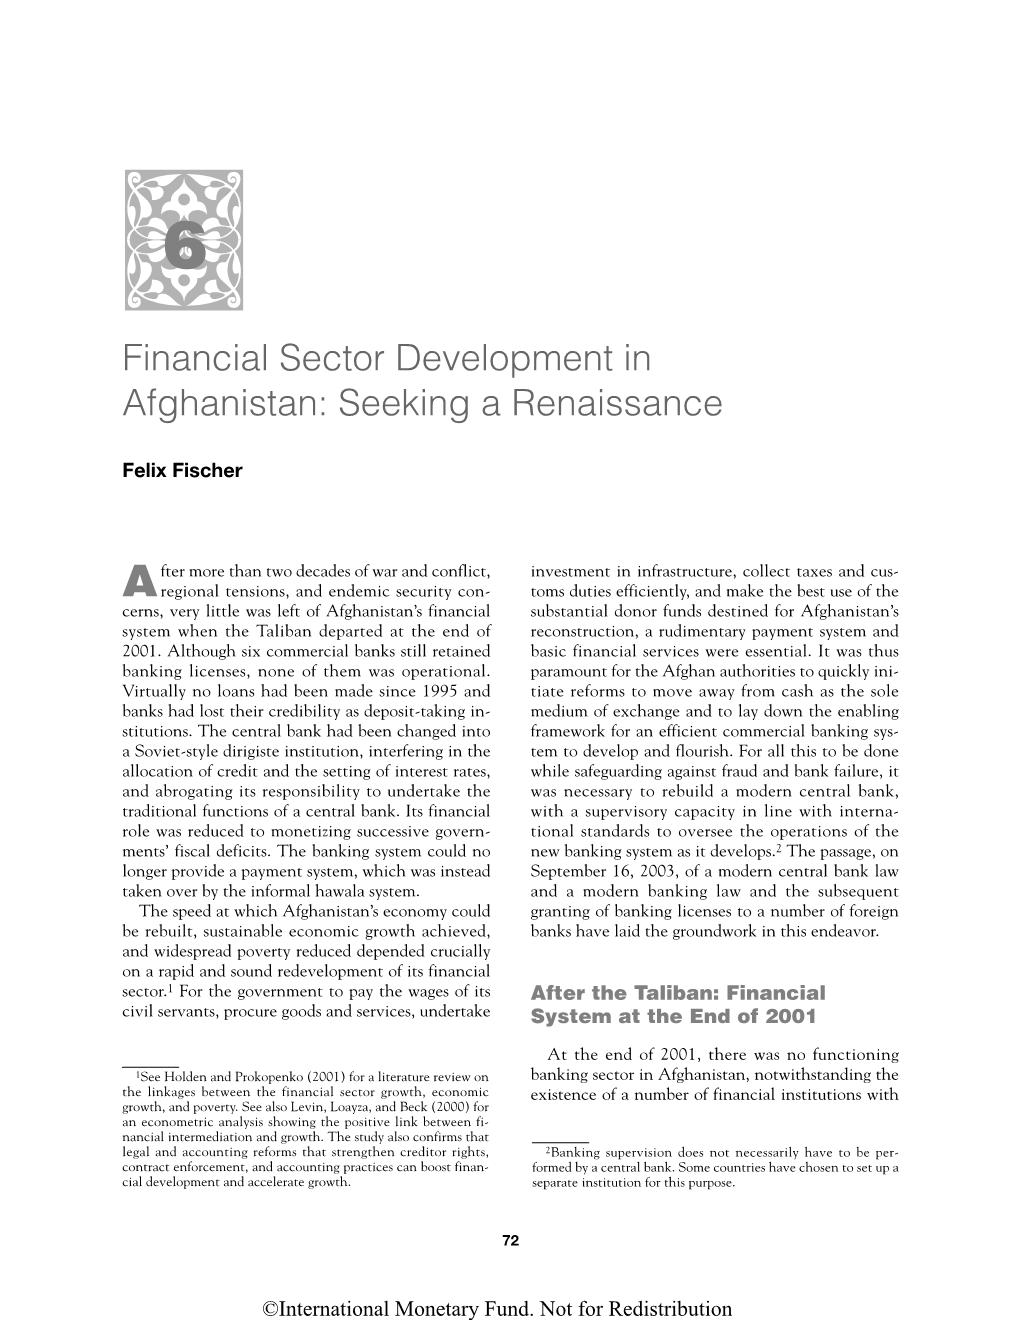 Financial Sector Development in Afghanistan: Seeking a Renaissance